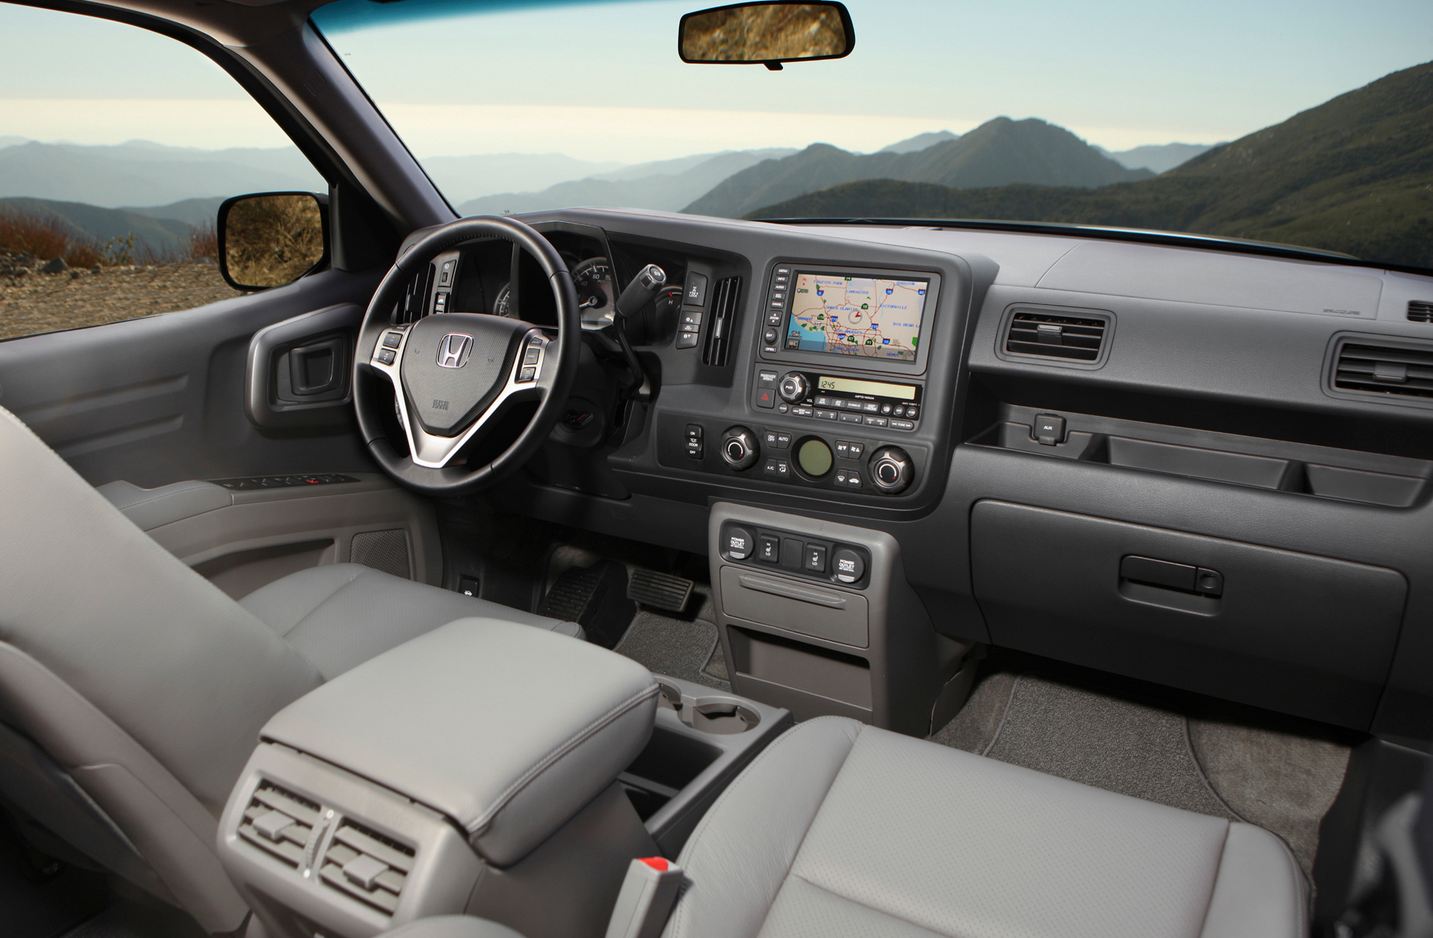 Honda Ridgeline Interior